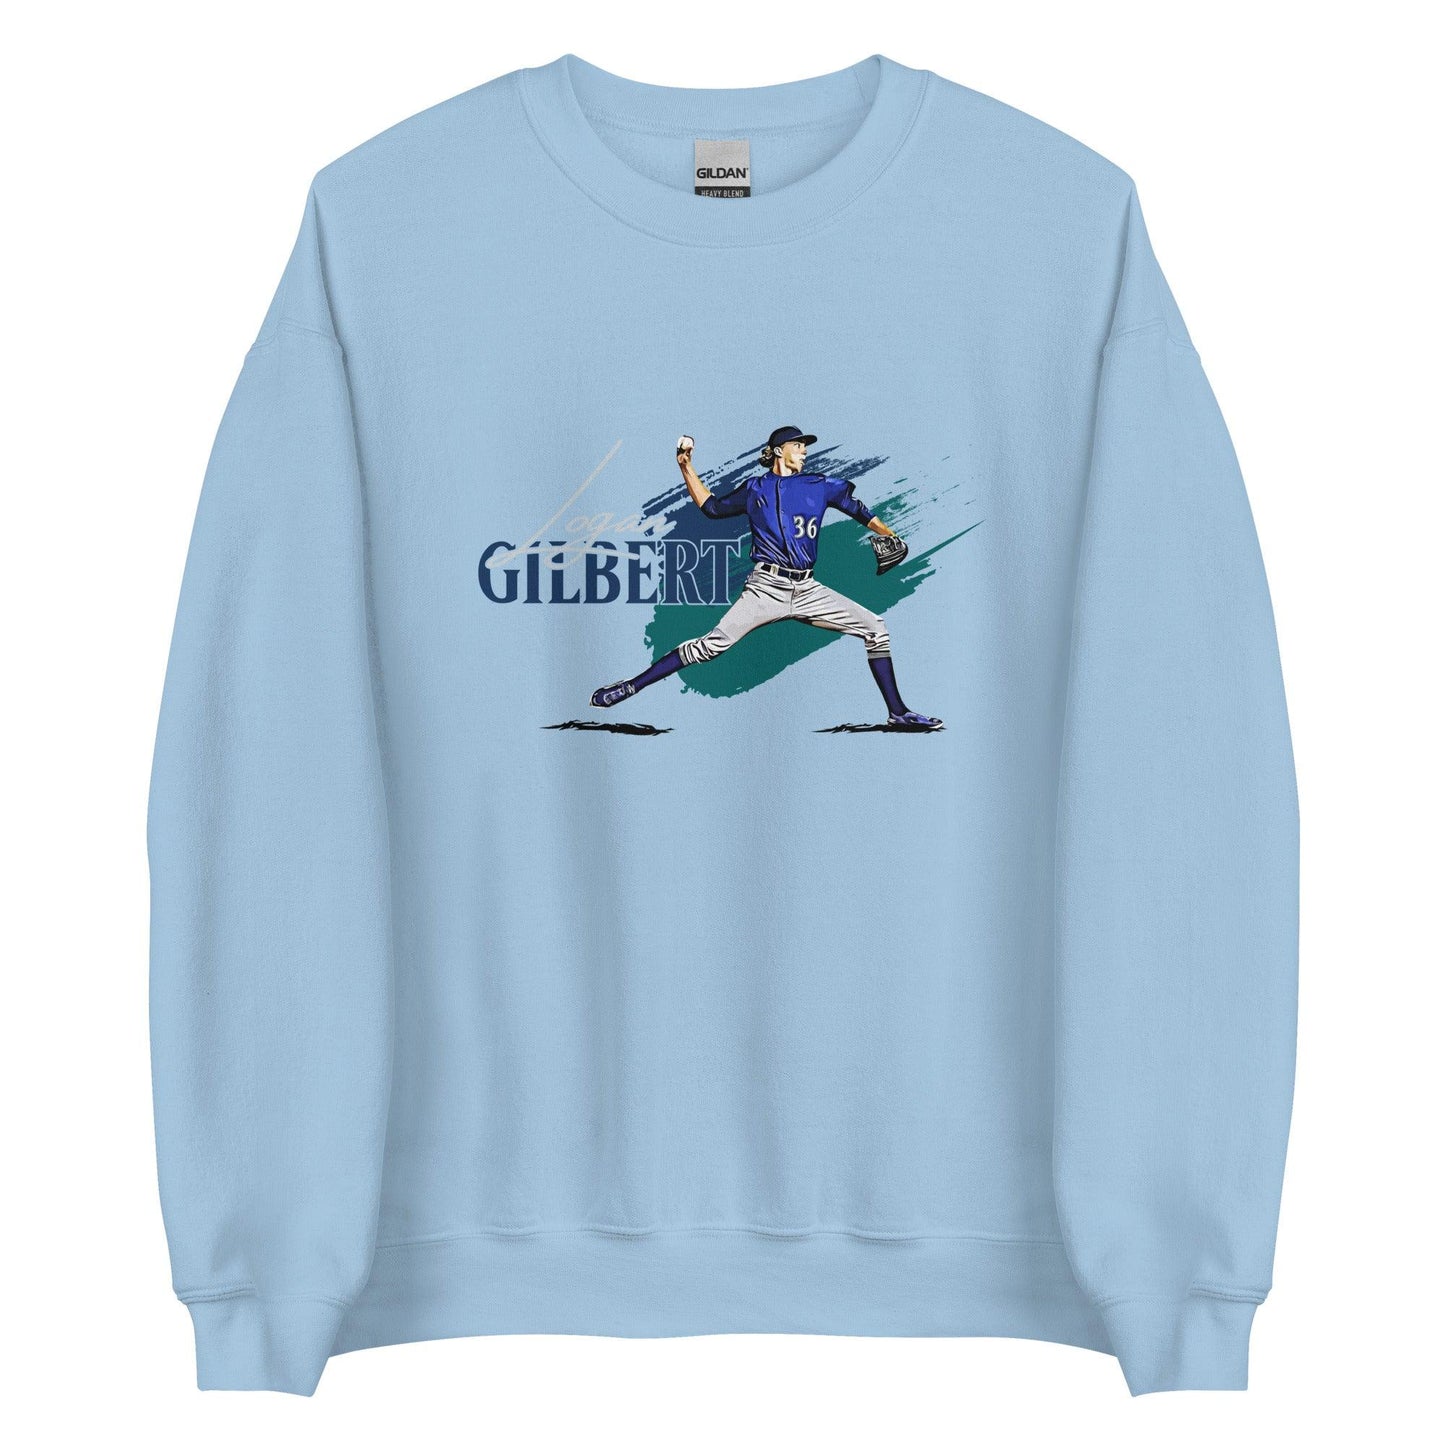 Logan Gilbert "Essential" Sweatshirt - Fan Arch